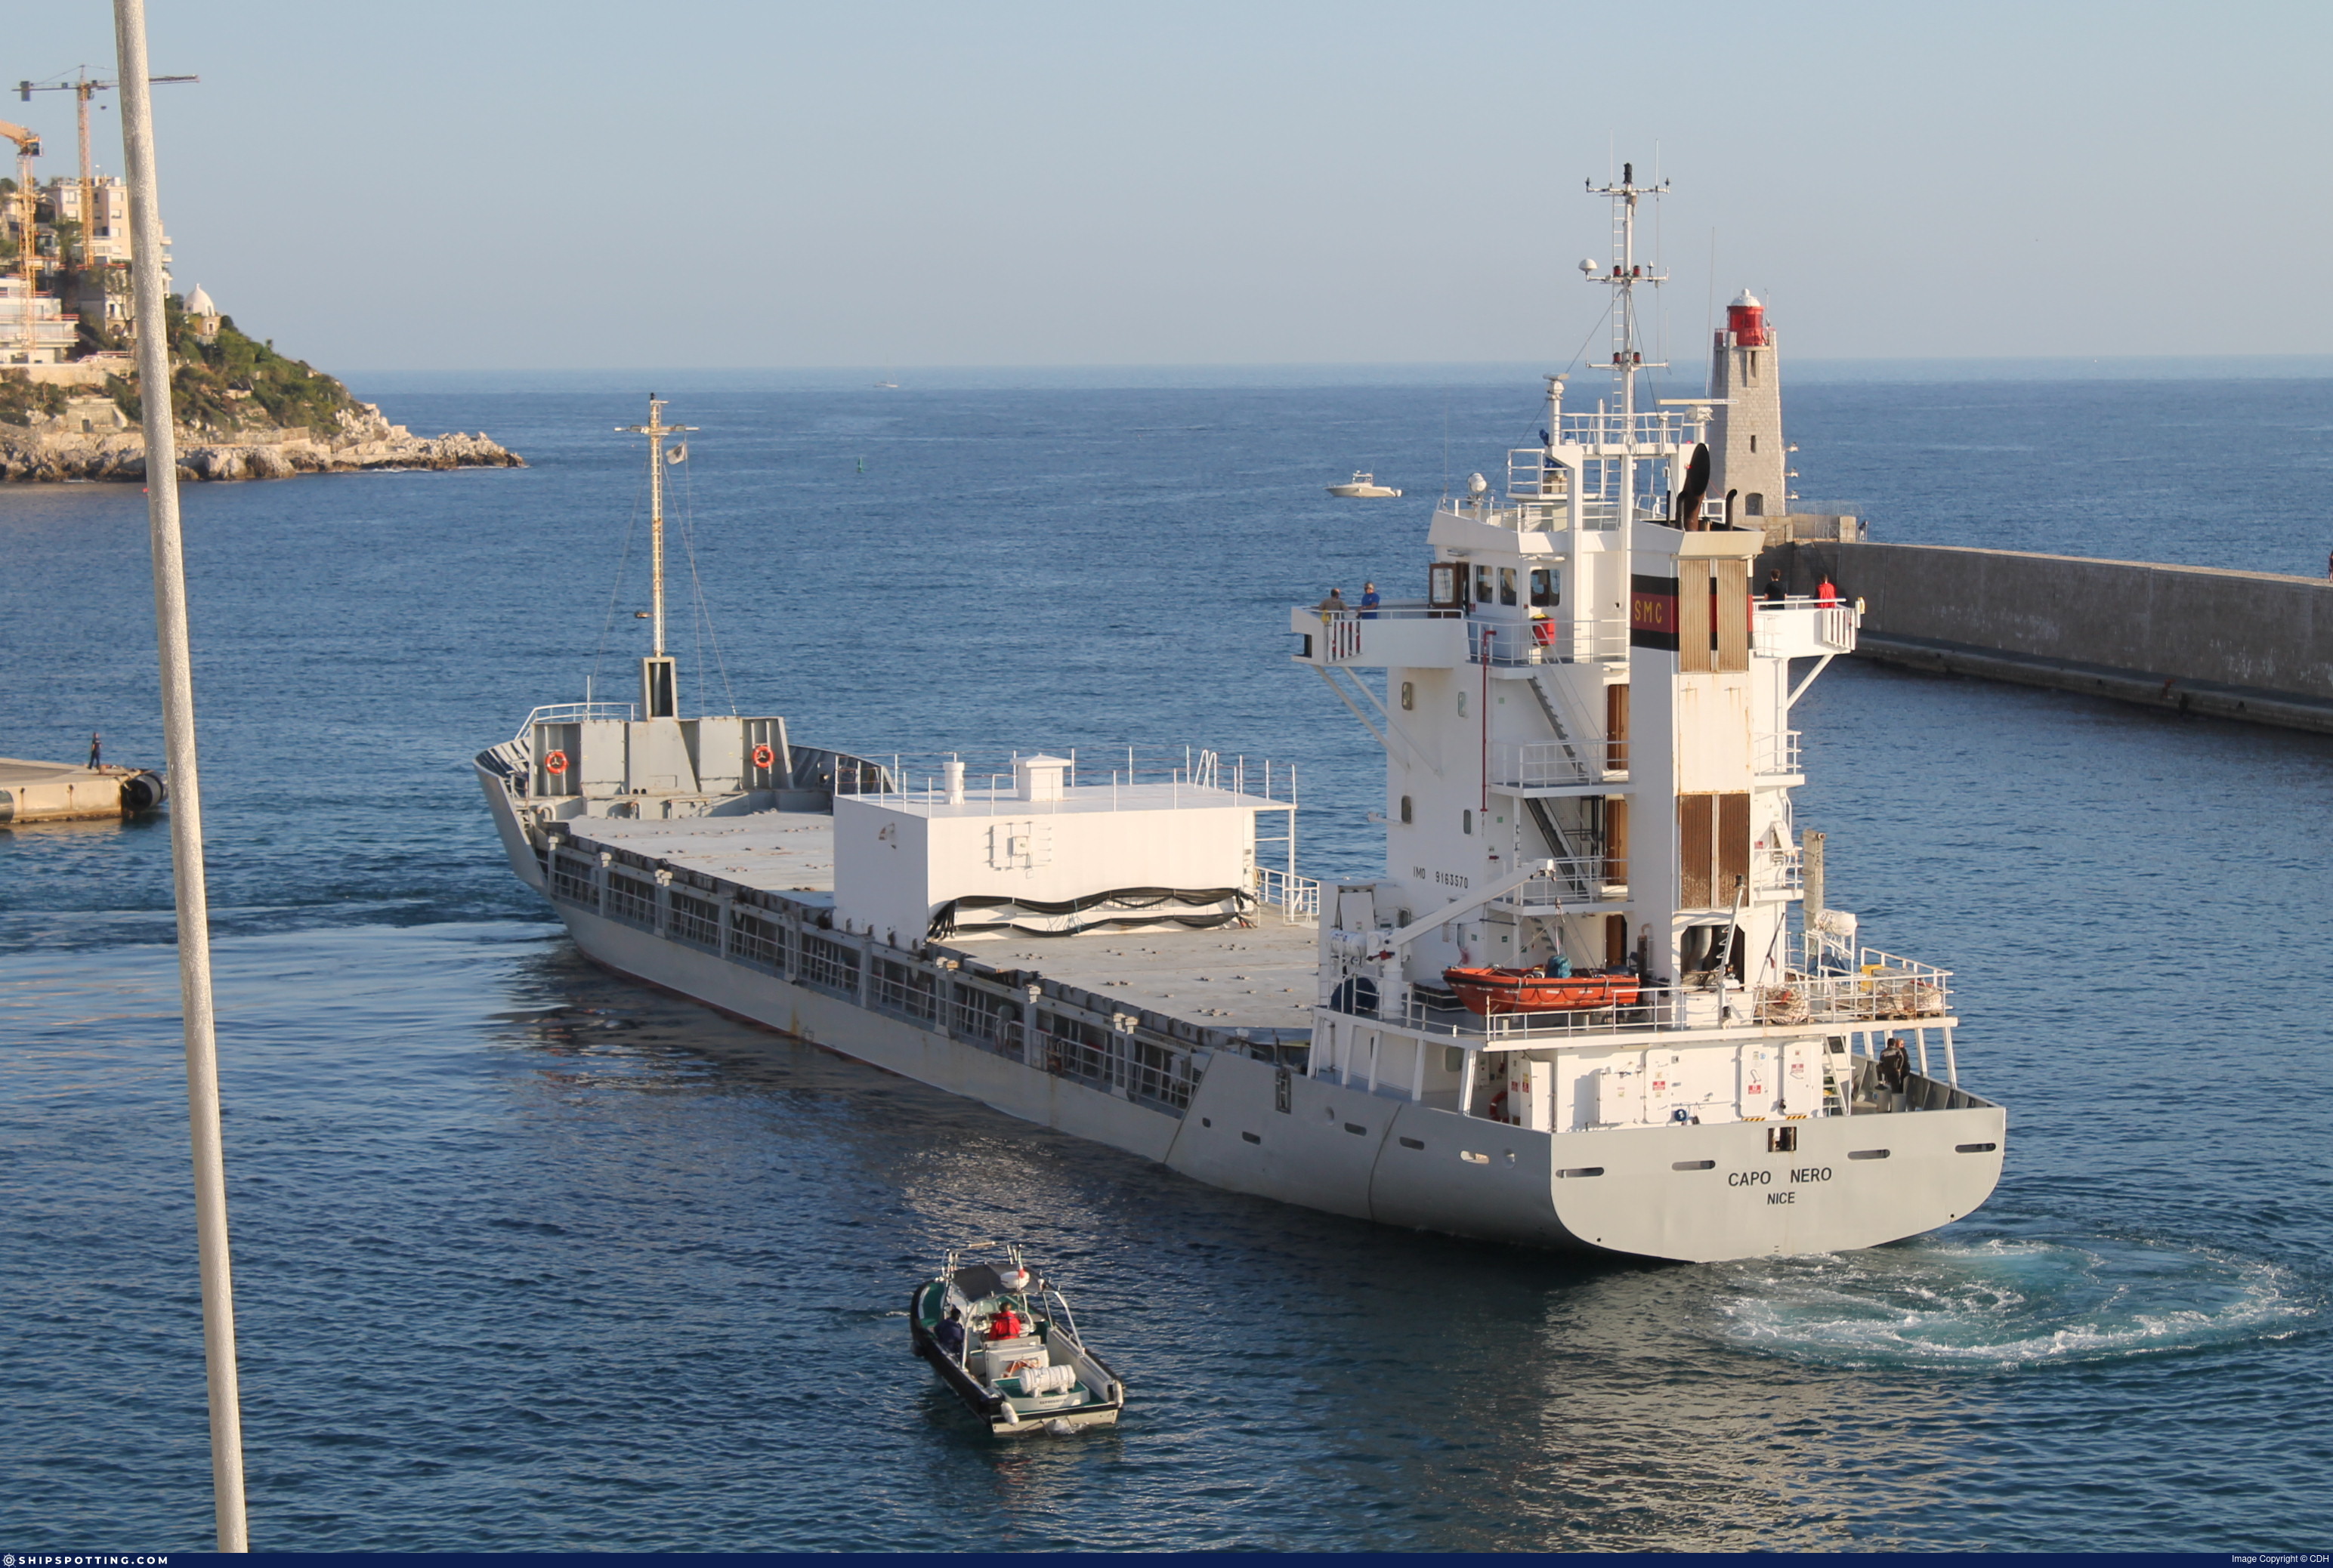 Capo Nero - IMO 9163570 - ShipSpotting.com - Ship Photos, Information,  Videos and Ship Tracker